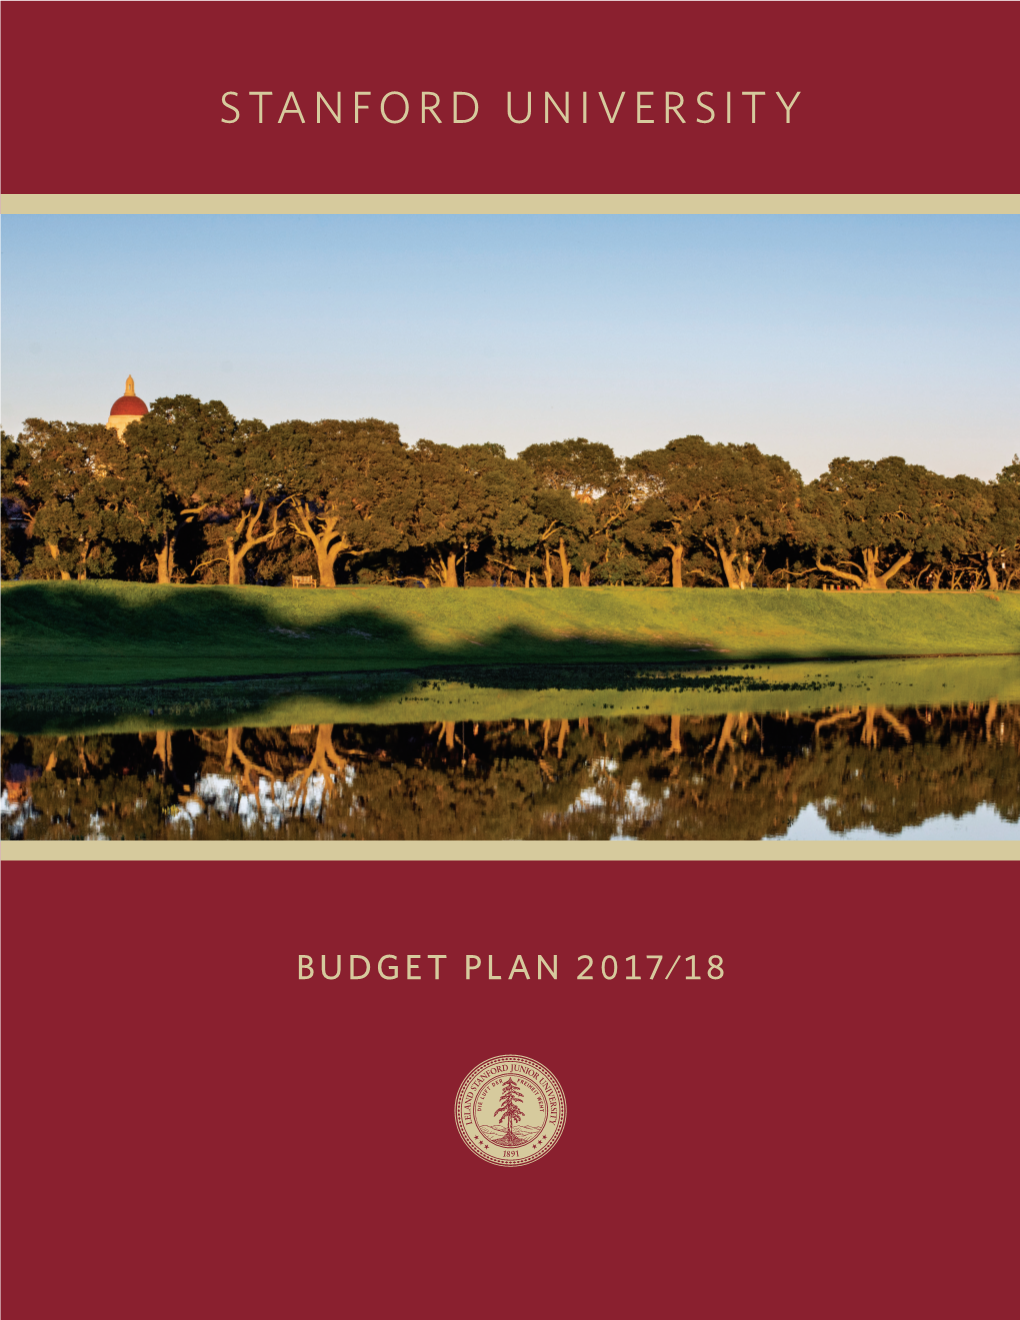 Stanford University Budget Plan 2017/18